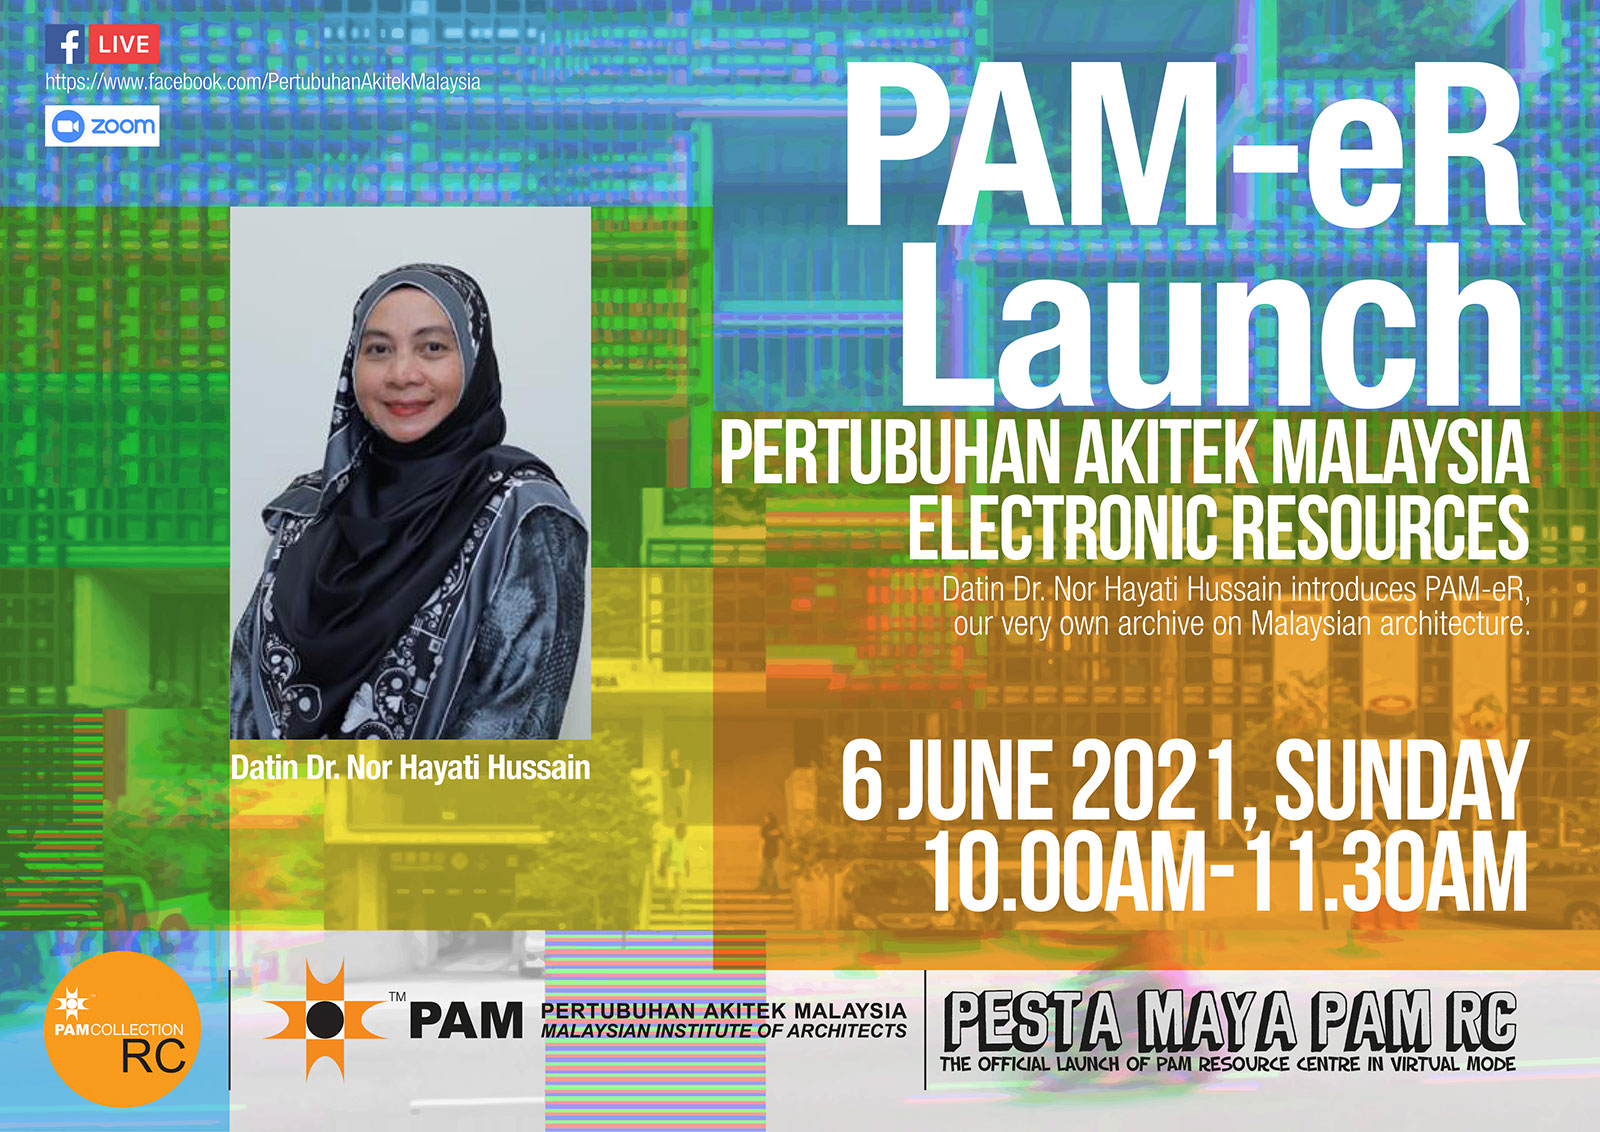 PAM-eR Launch: Pertubuhan Akitek Malaysia Electronic Resources